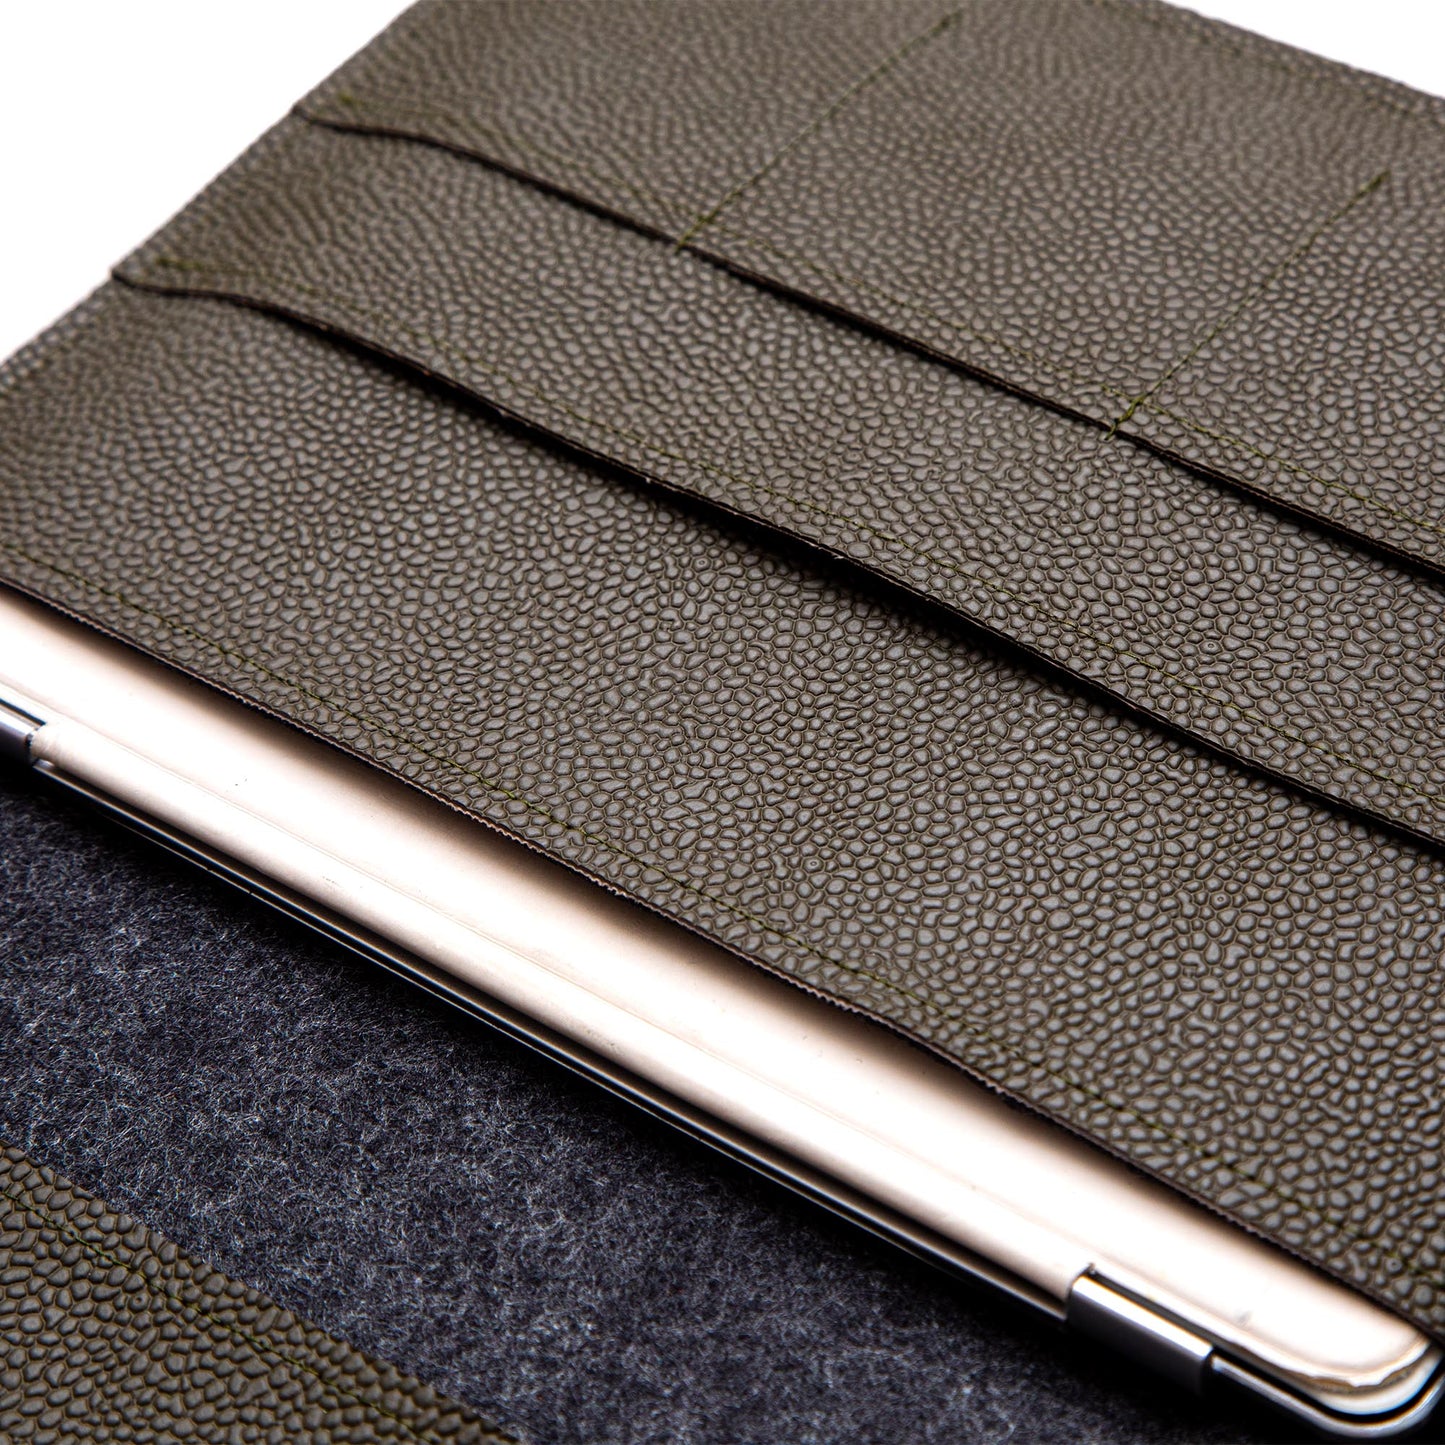 Handmade iPad Cover - Dark Green Faux Leather Folio for Apple iPad Air/Pro/Mini